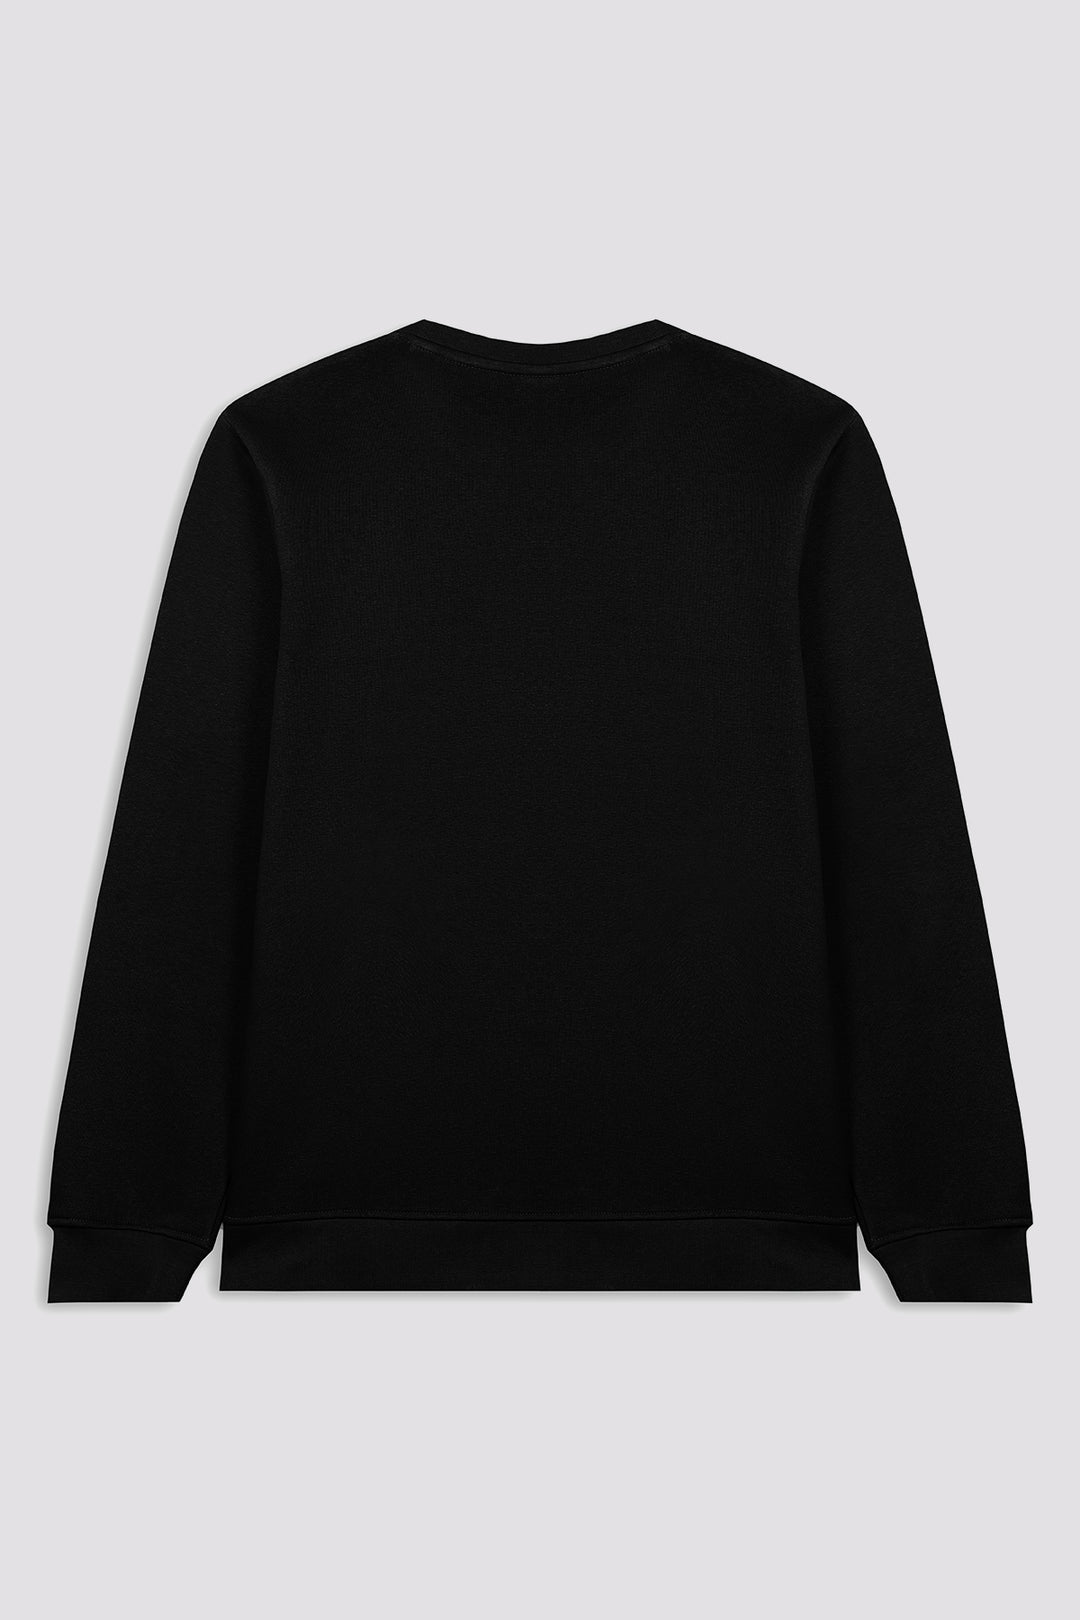 Venturous Graphic Black Sweatshirt - W22 - MSW072R